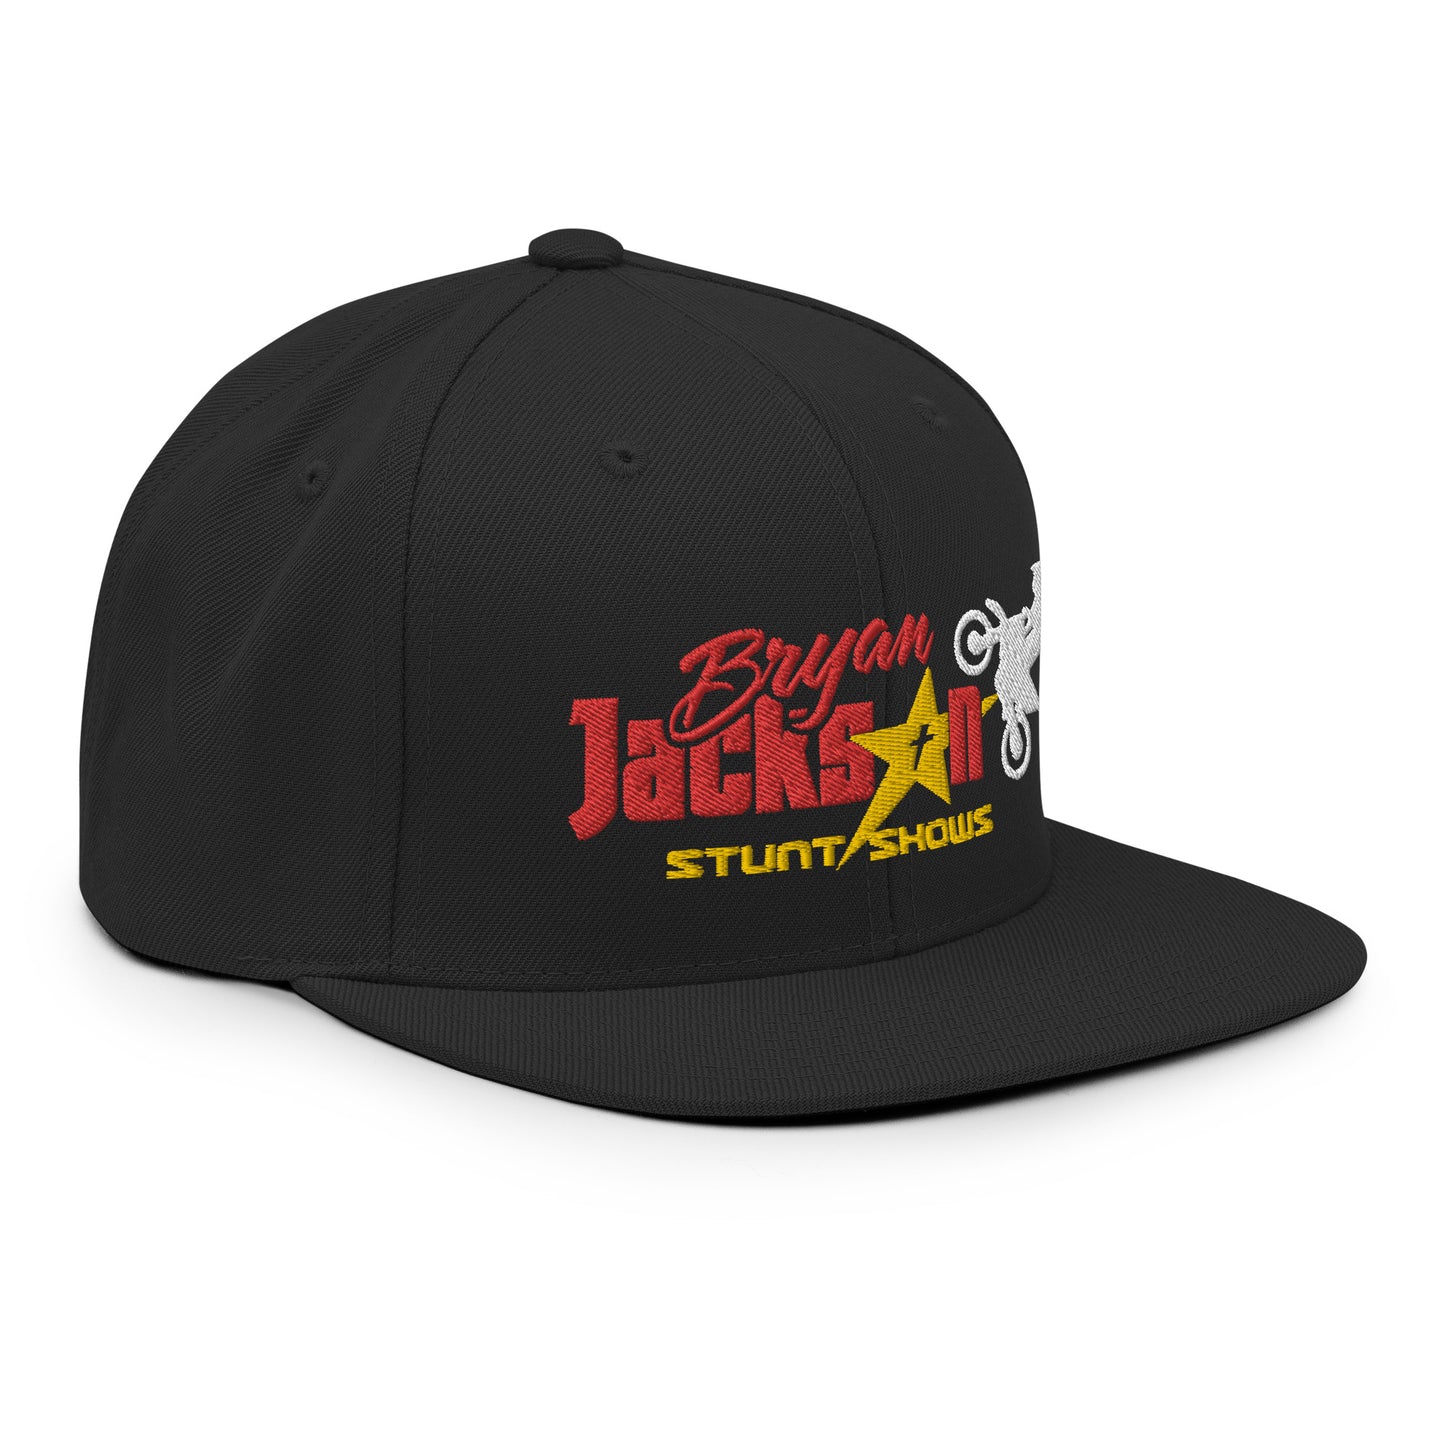 Bryan Jackson Stunt Shows Snapback Hat